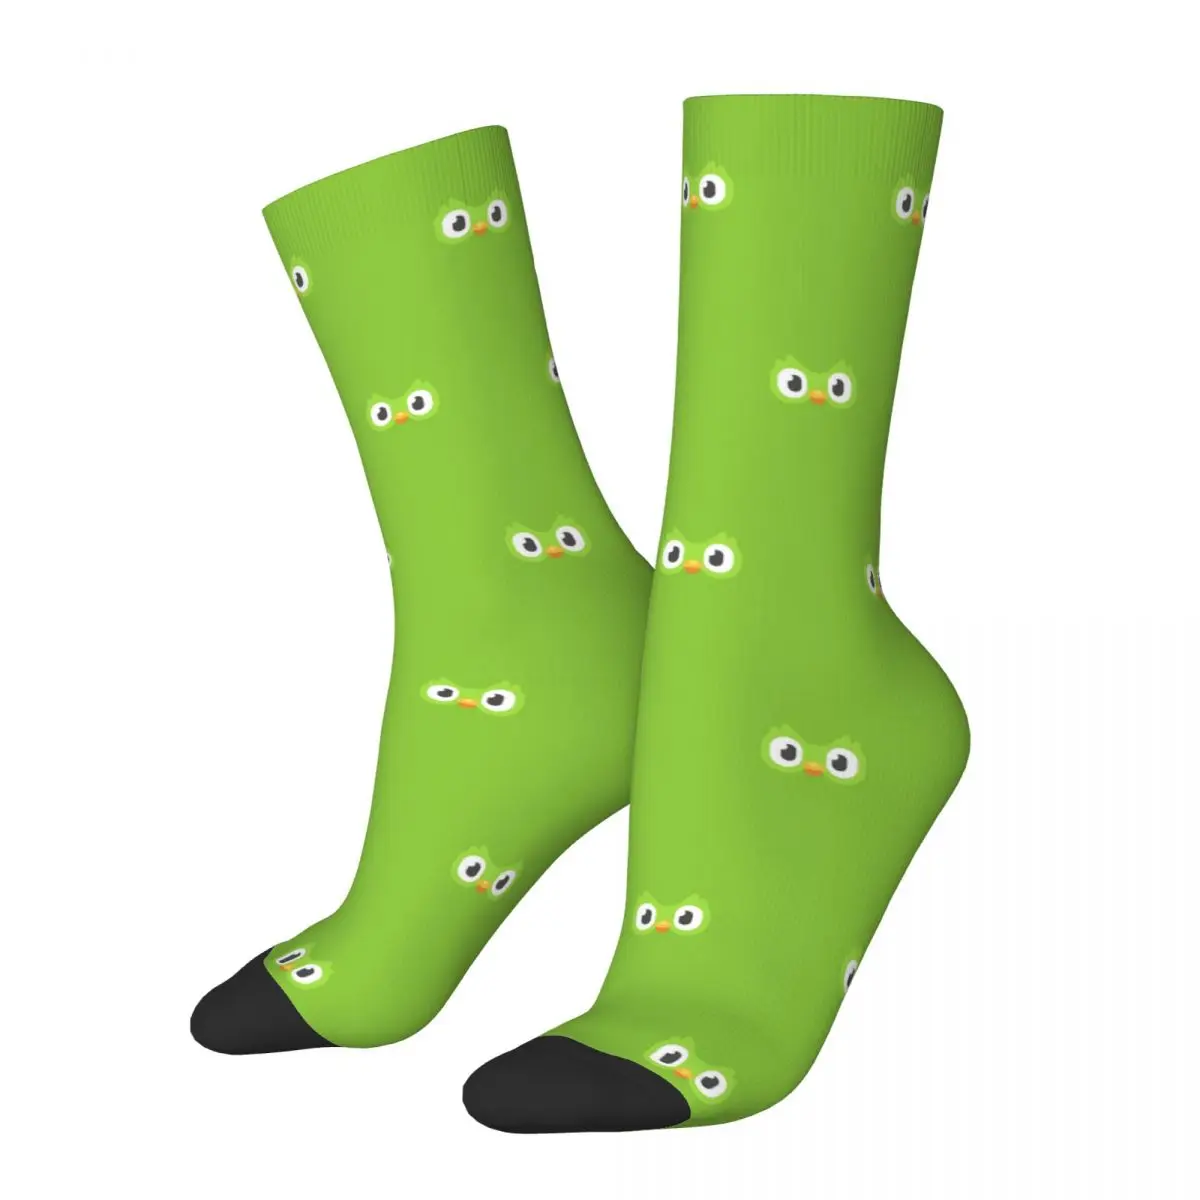 

Duolingo Owl Duo Socks Harajuku High Quality Stockings All Season Long Socks Accessories for Man's Woman's Birthday Present